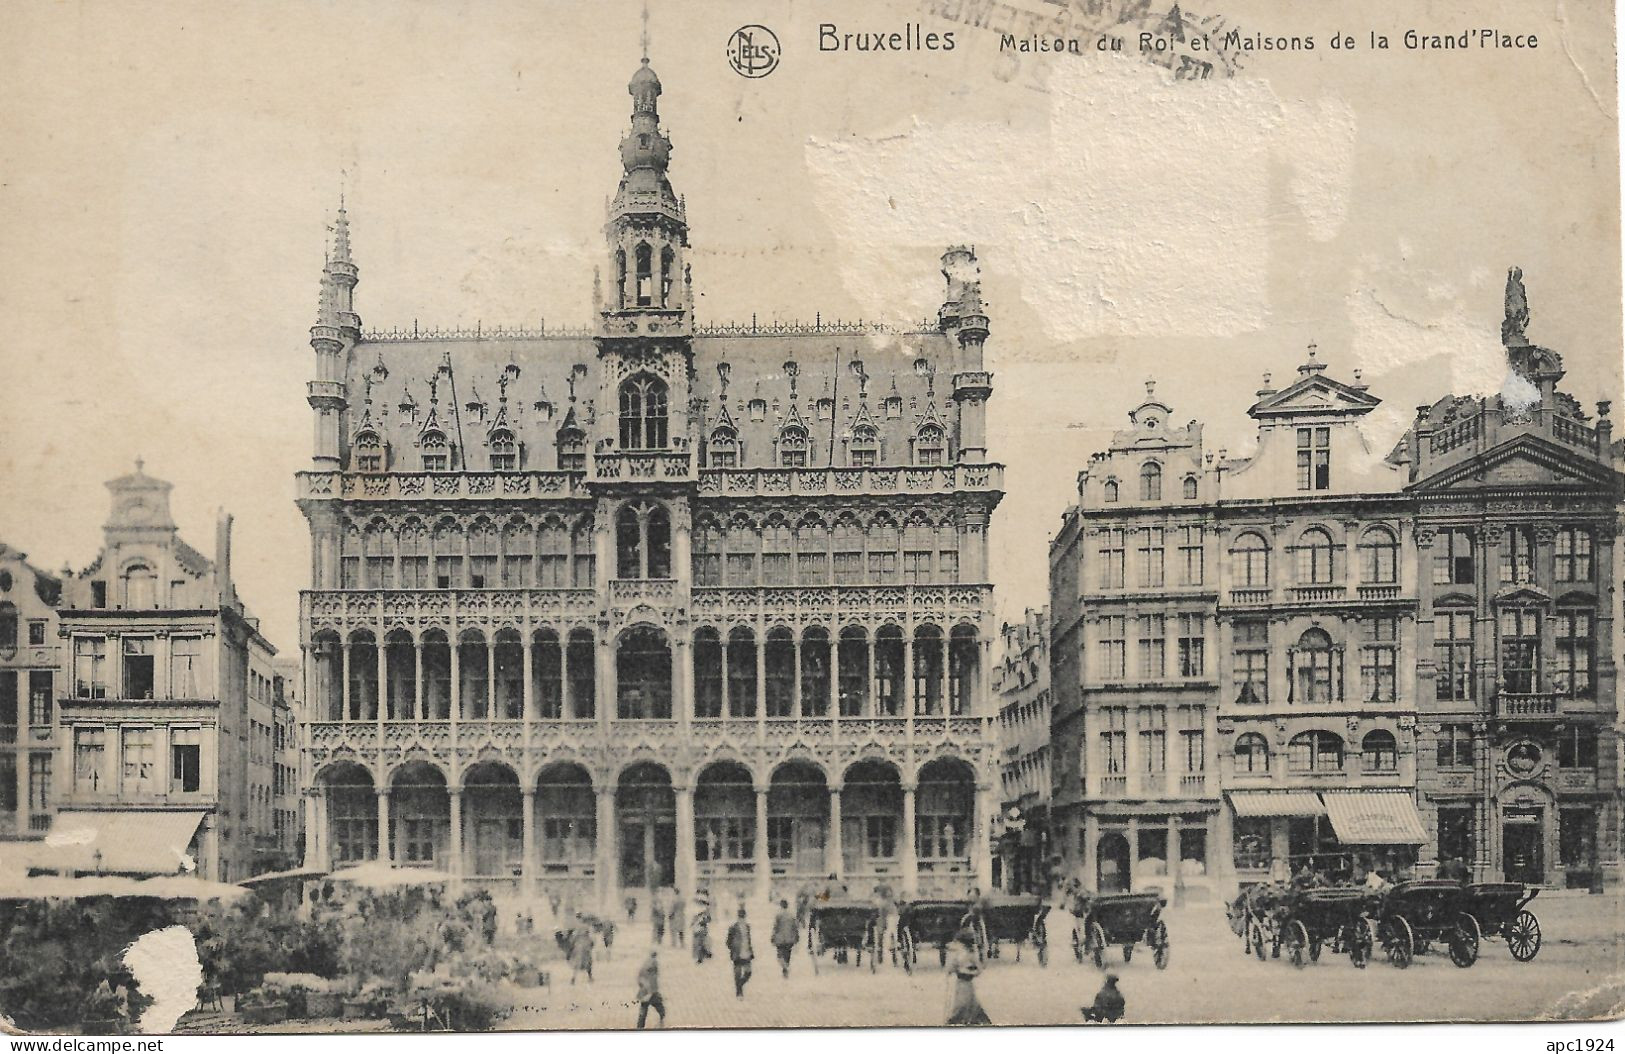 Belgica 1920 -  Postal Con Matasellos Especial De Los JJOO De 1920 - Circulada El 27 8 1920 A Paris - Ete 1920: Anvers